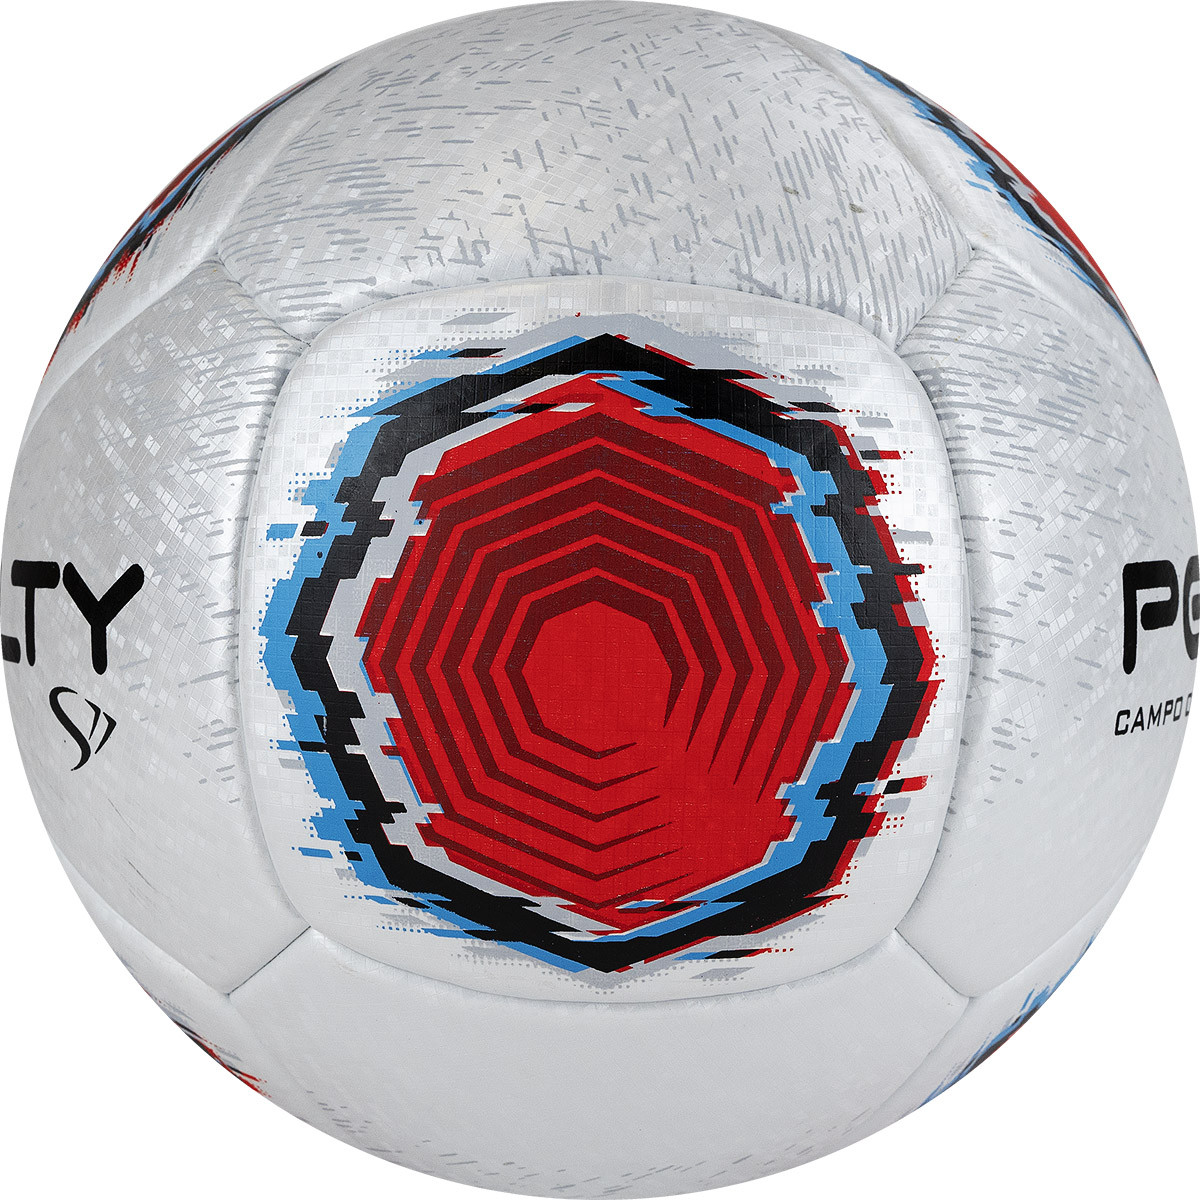 Мяч футбольный Penalty Bola Campo S11 R1 XXII, 5416261610-U, PU, термосшивка, серебр-красно-синий 1200_1200